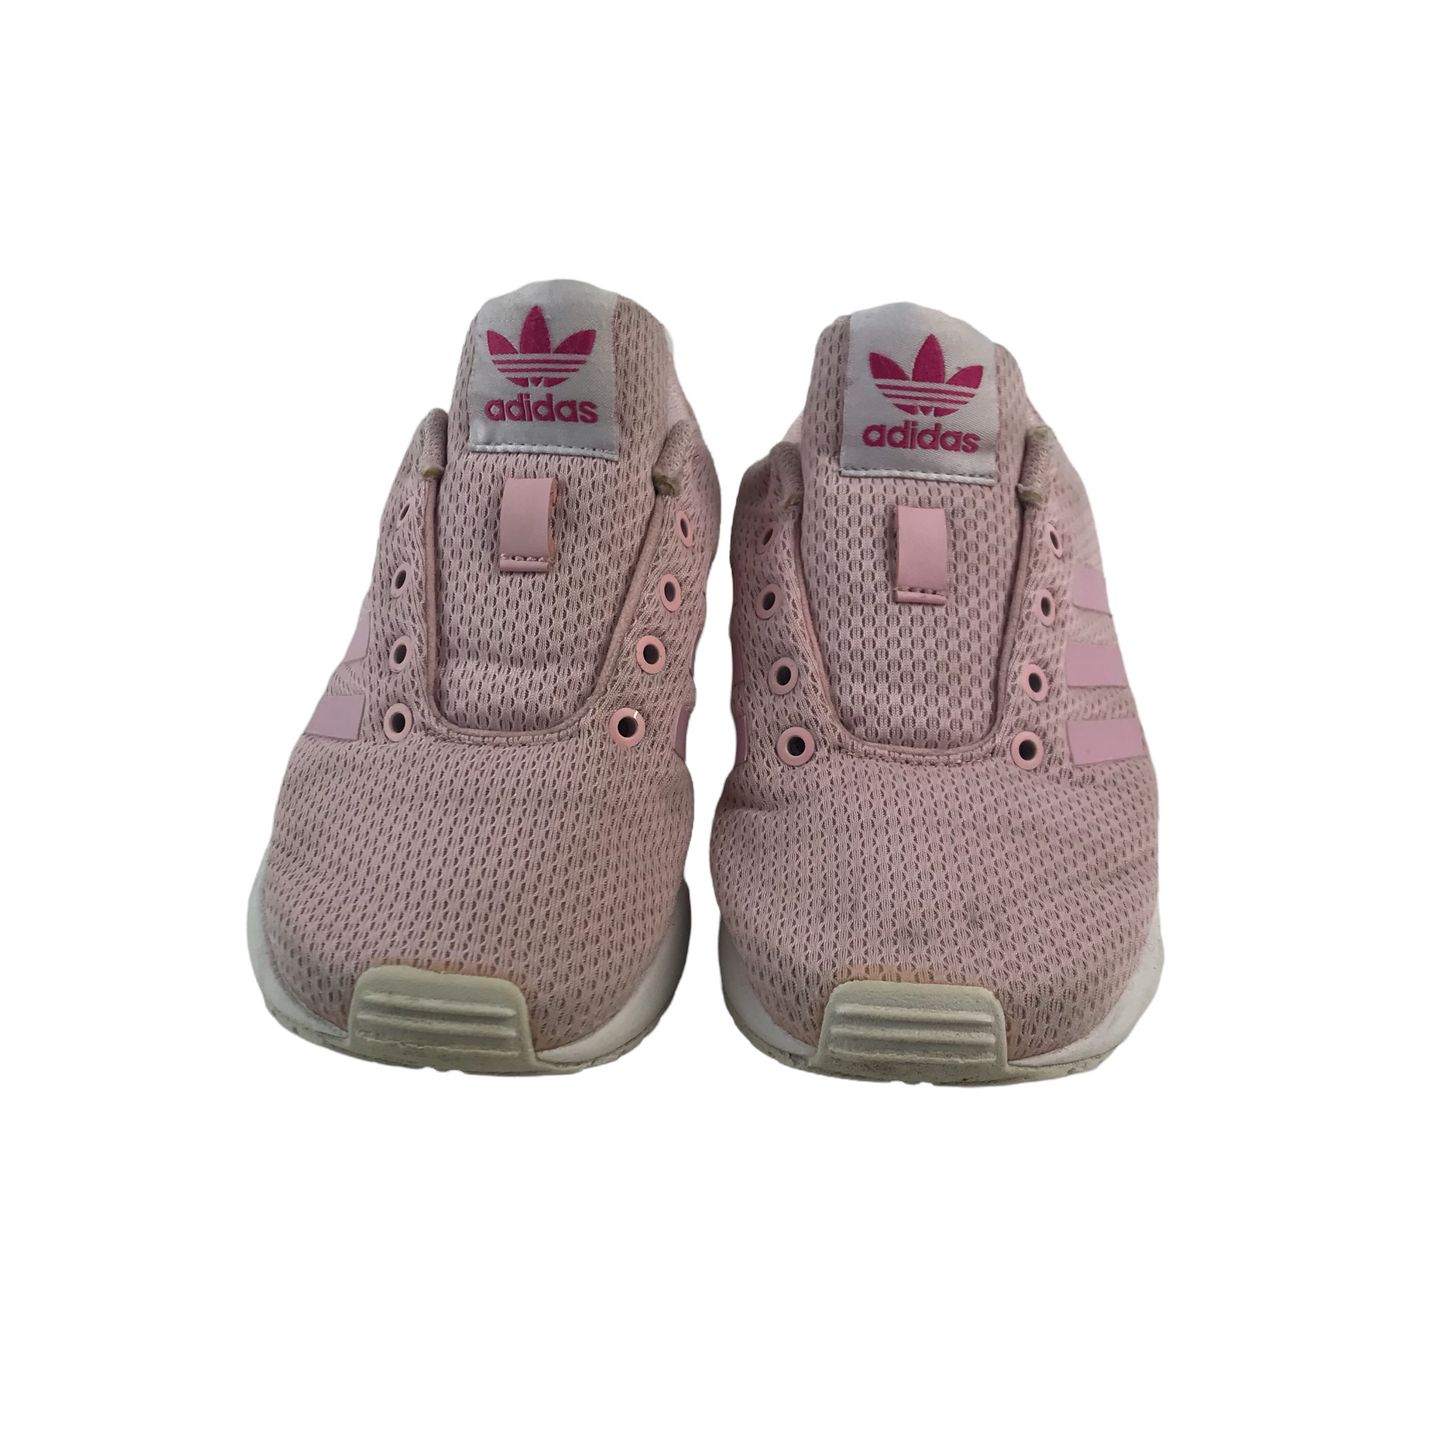 Adidas Light Pink Trainers Shoe Size 13K (jr)